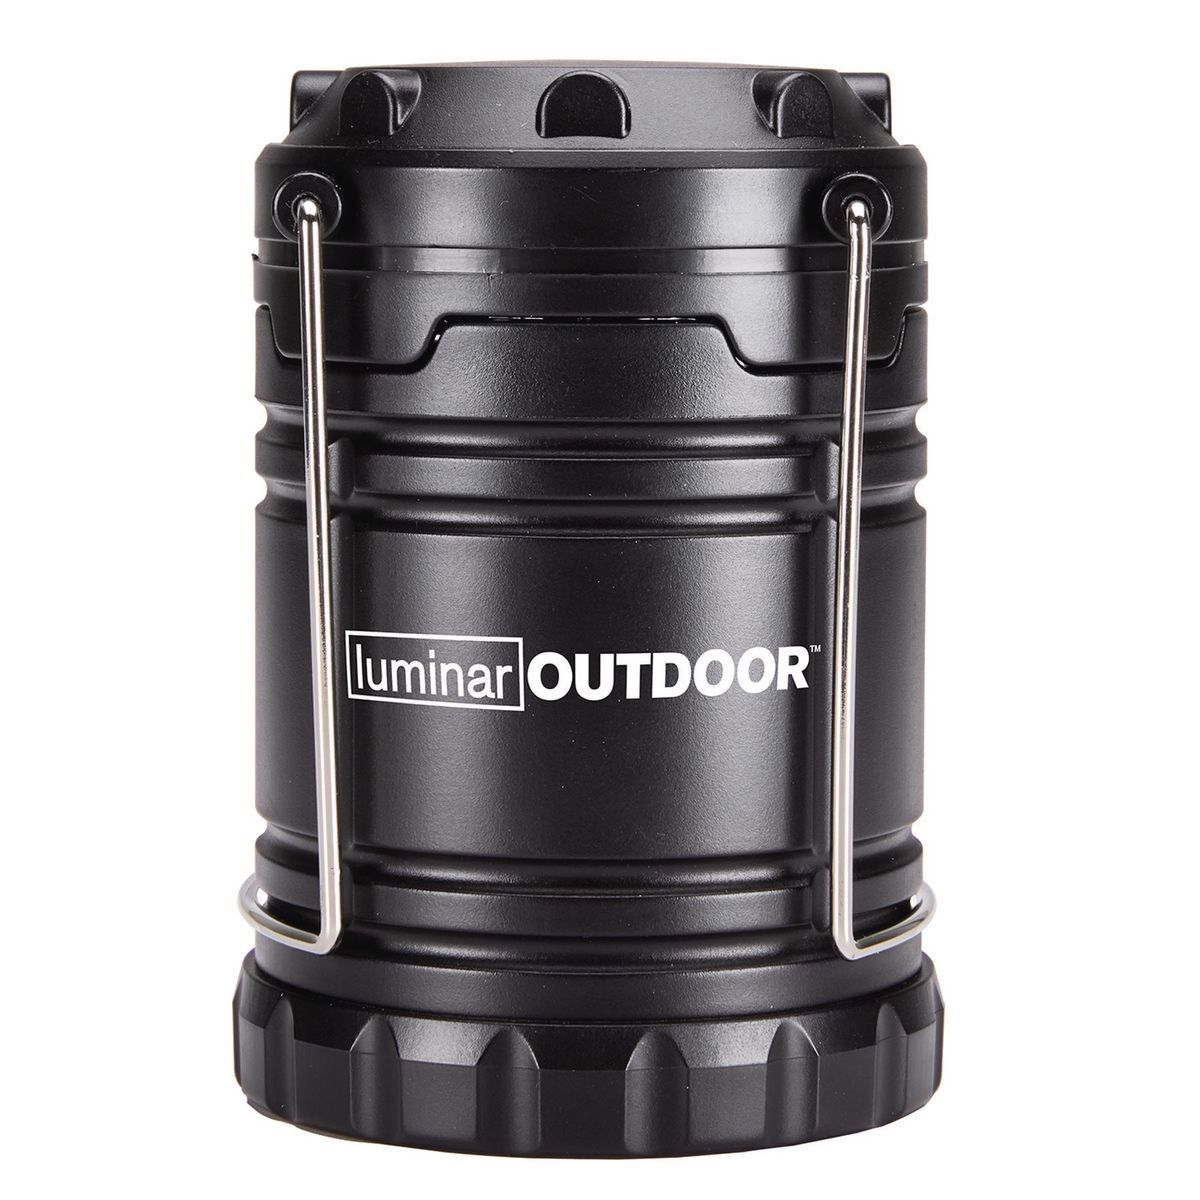 Luminar Outdoor 250 Lumen Lantern Batteries INCLUDED for Sale in  Northglenn, CO - OfferUp